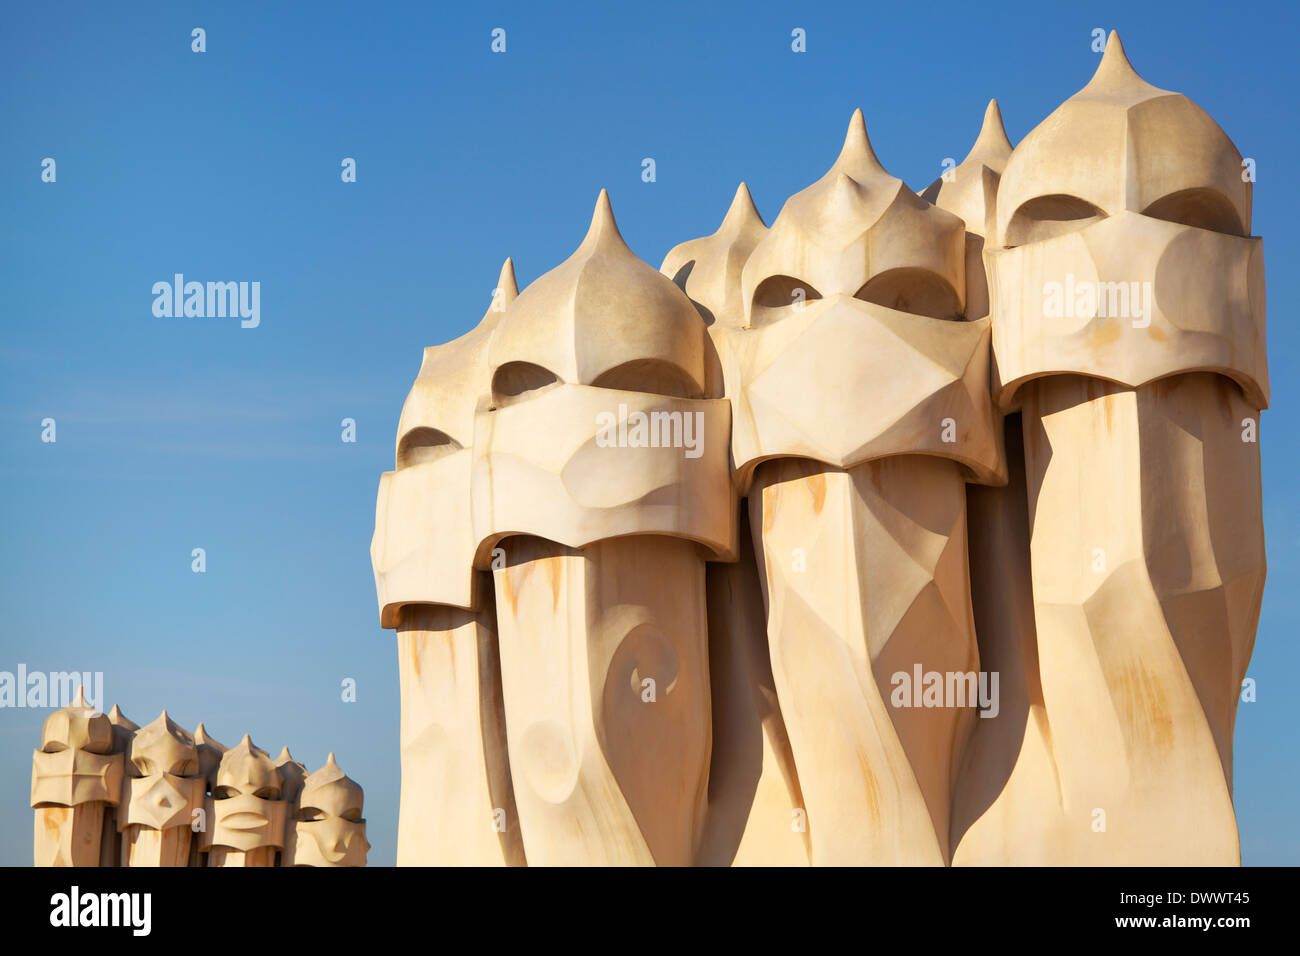 Gaudi Chimneys statues at Casa Mila, Barcelona, Spain Stock Photo